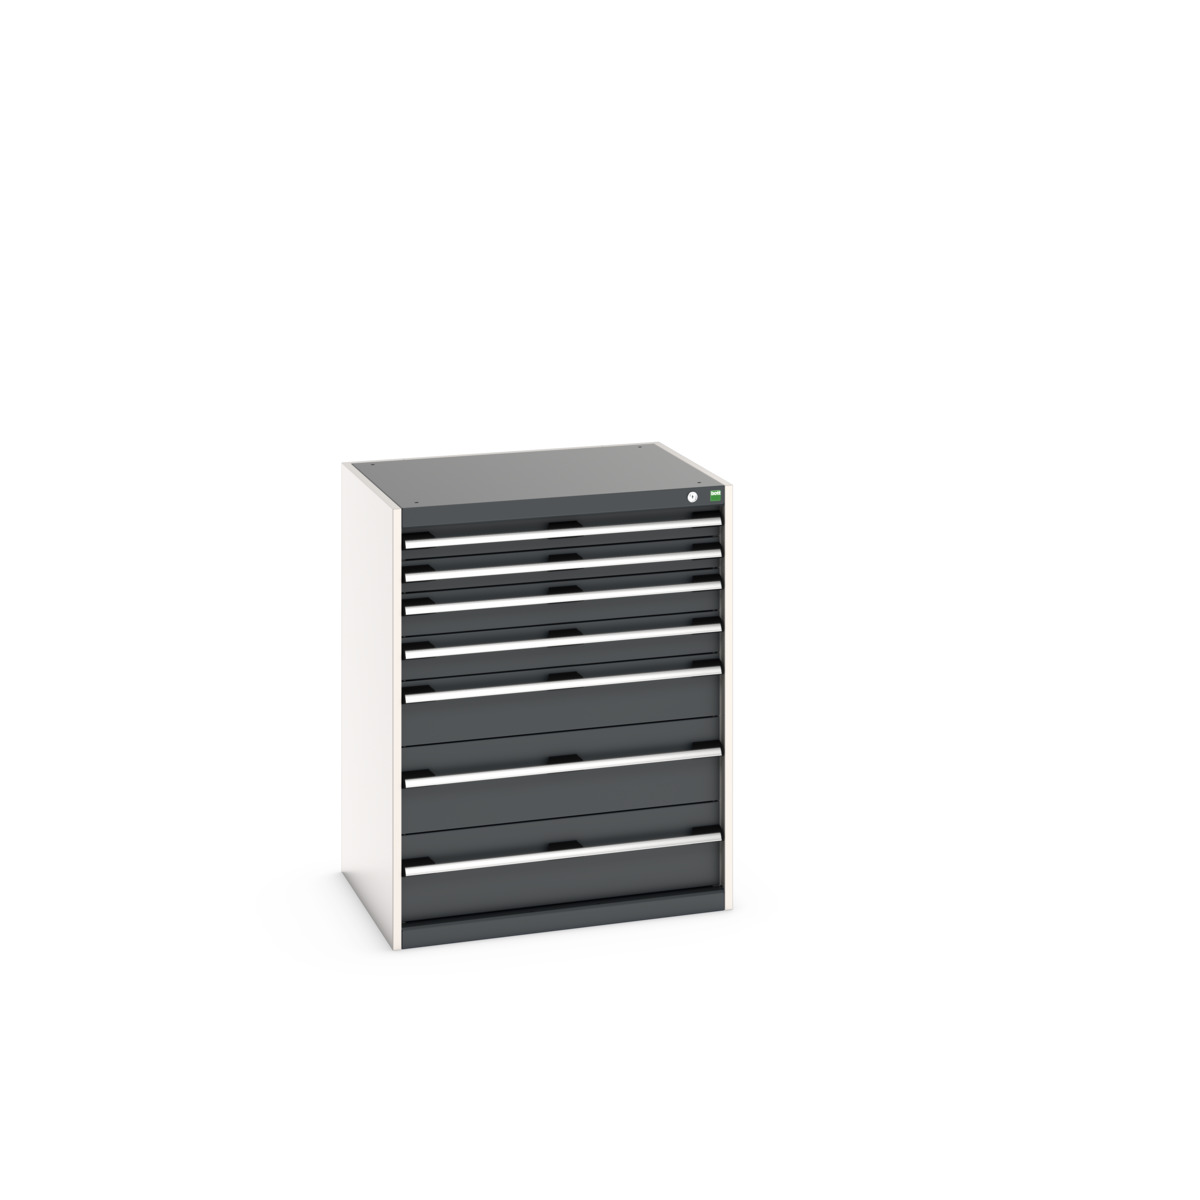 40020053. - cubio drawer cabinet